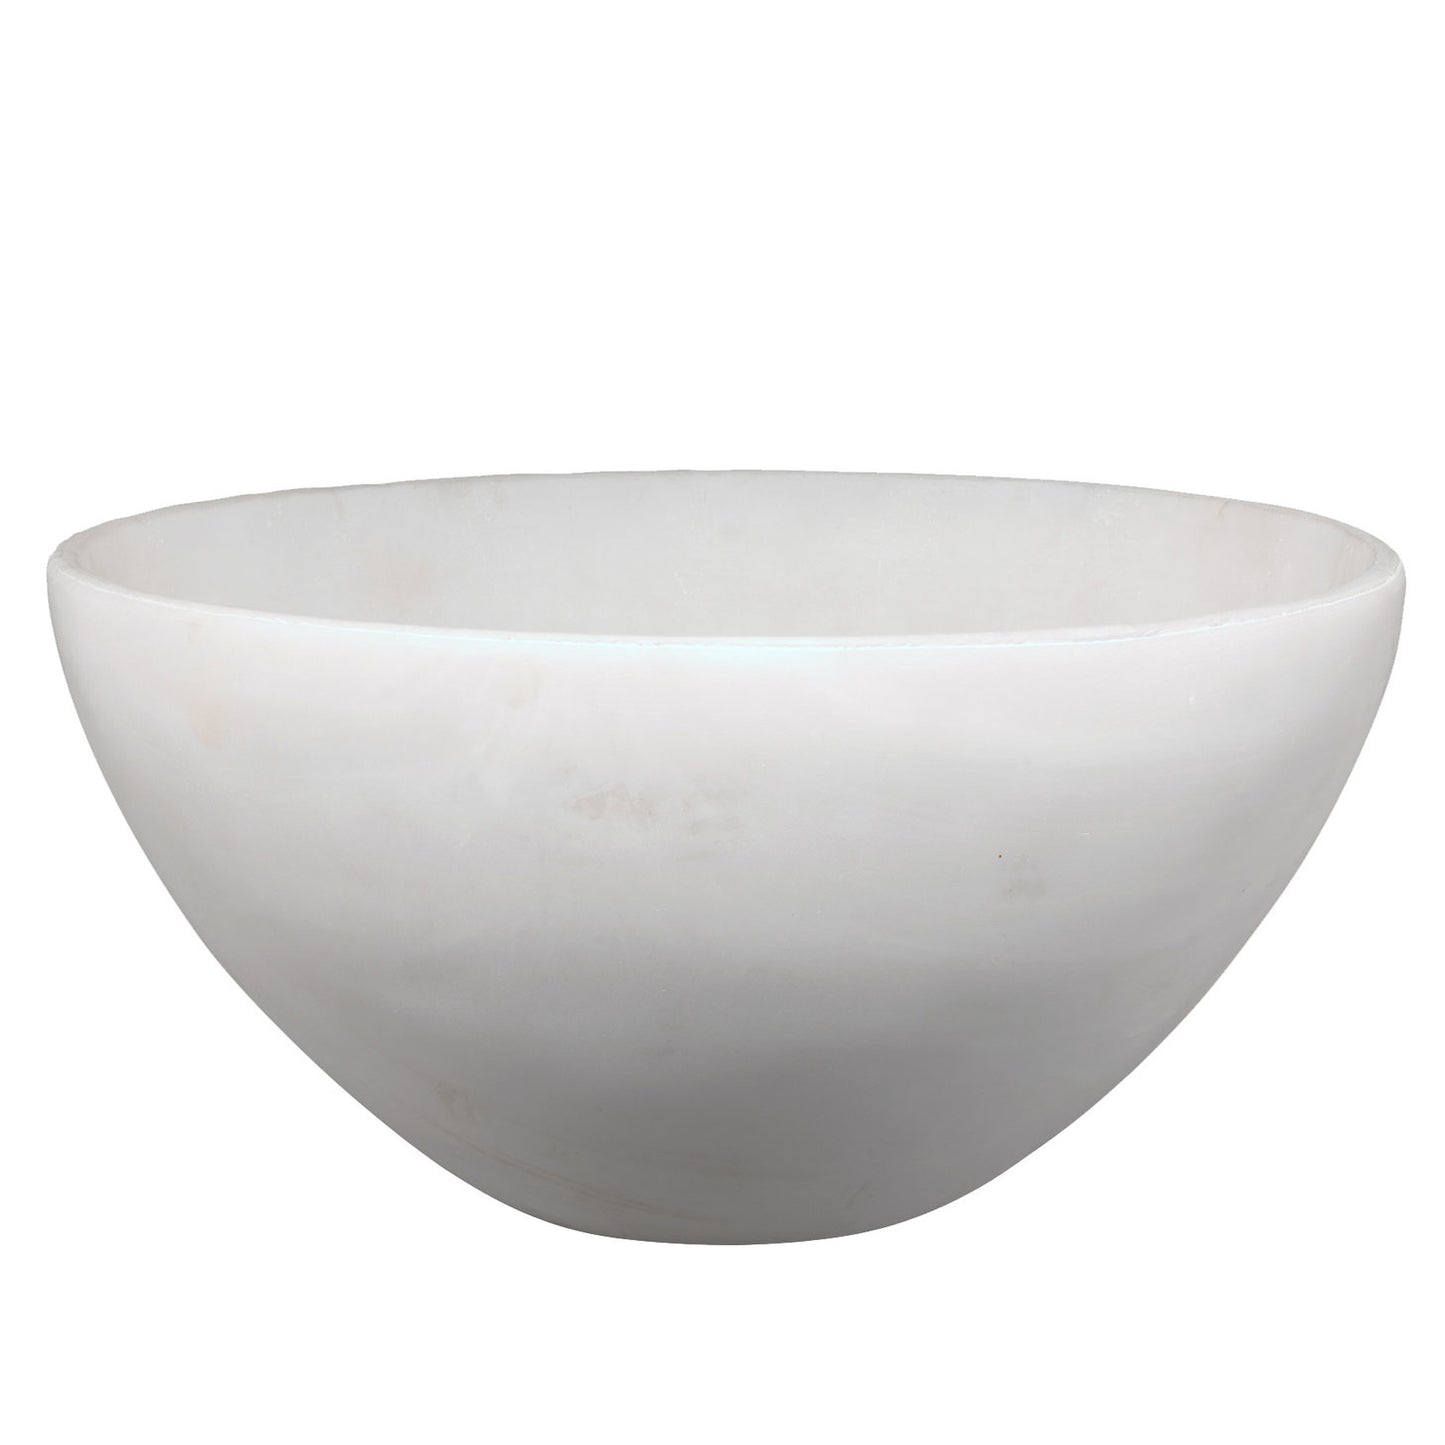 Organic Bowl